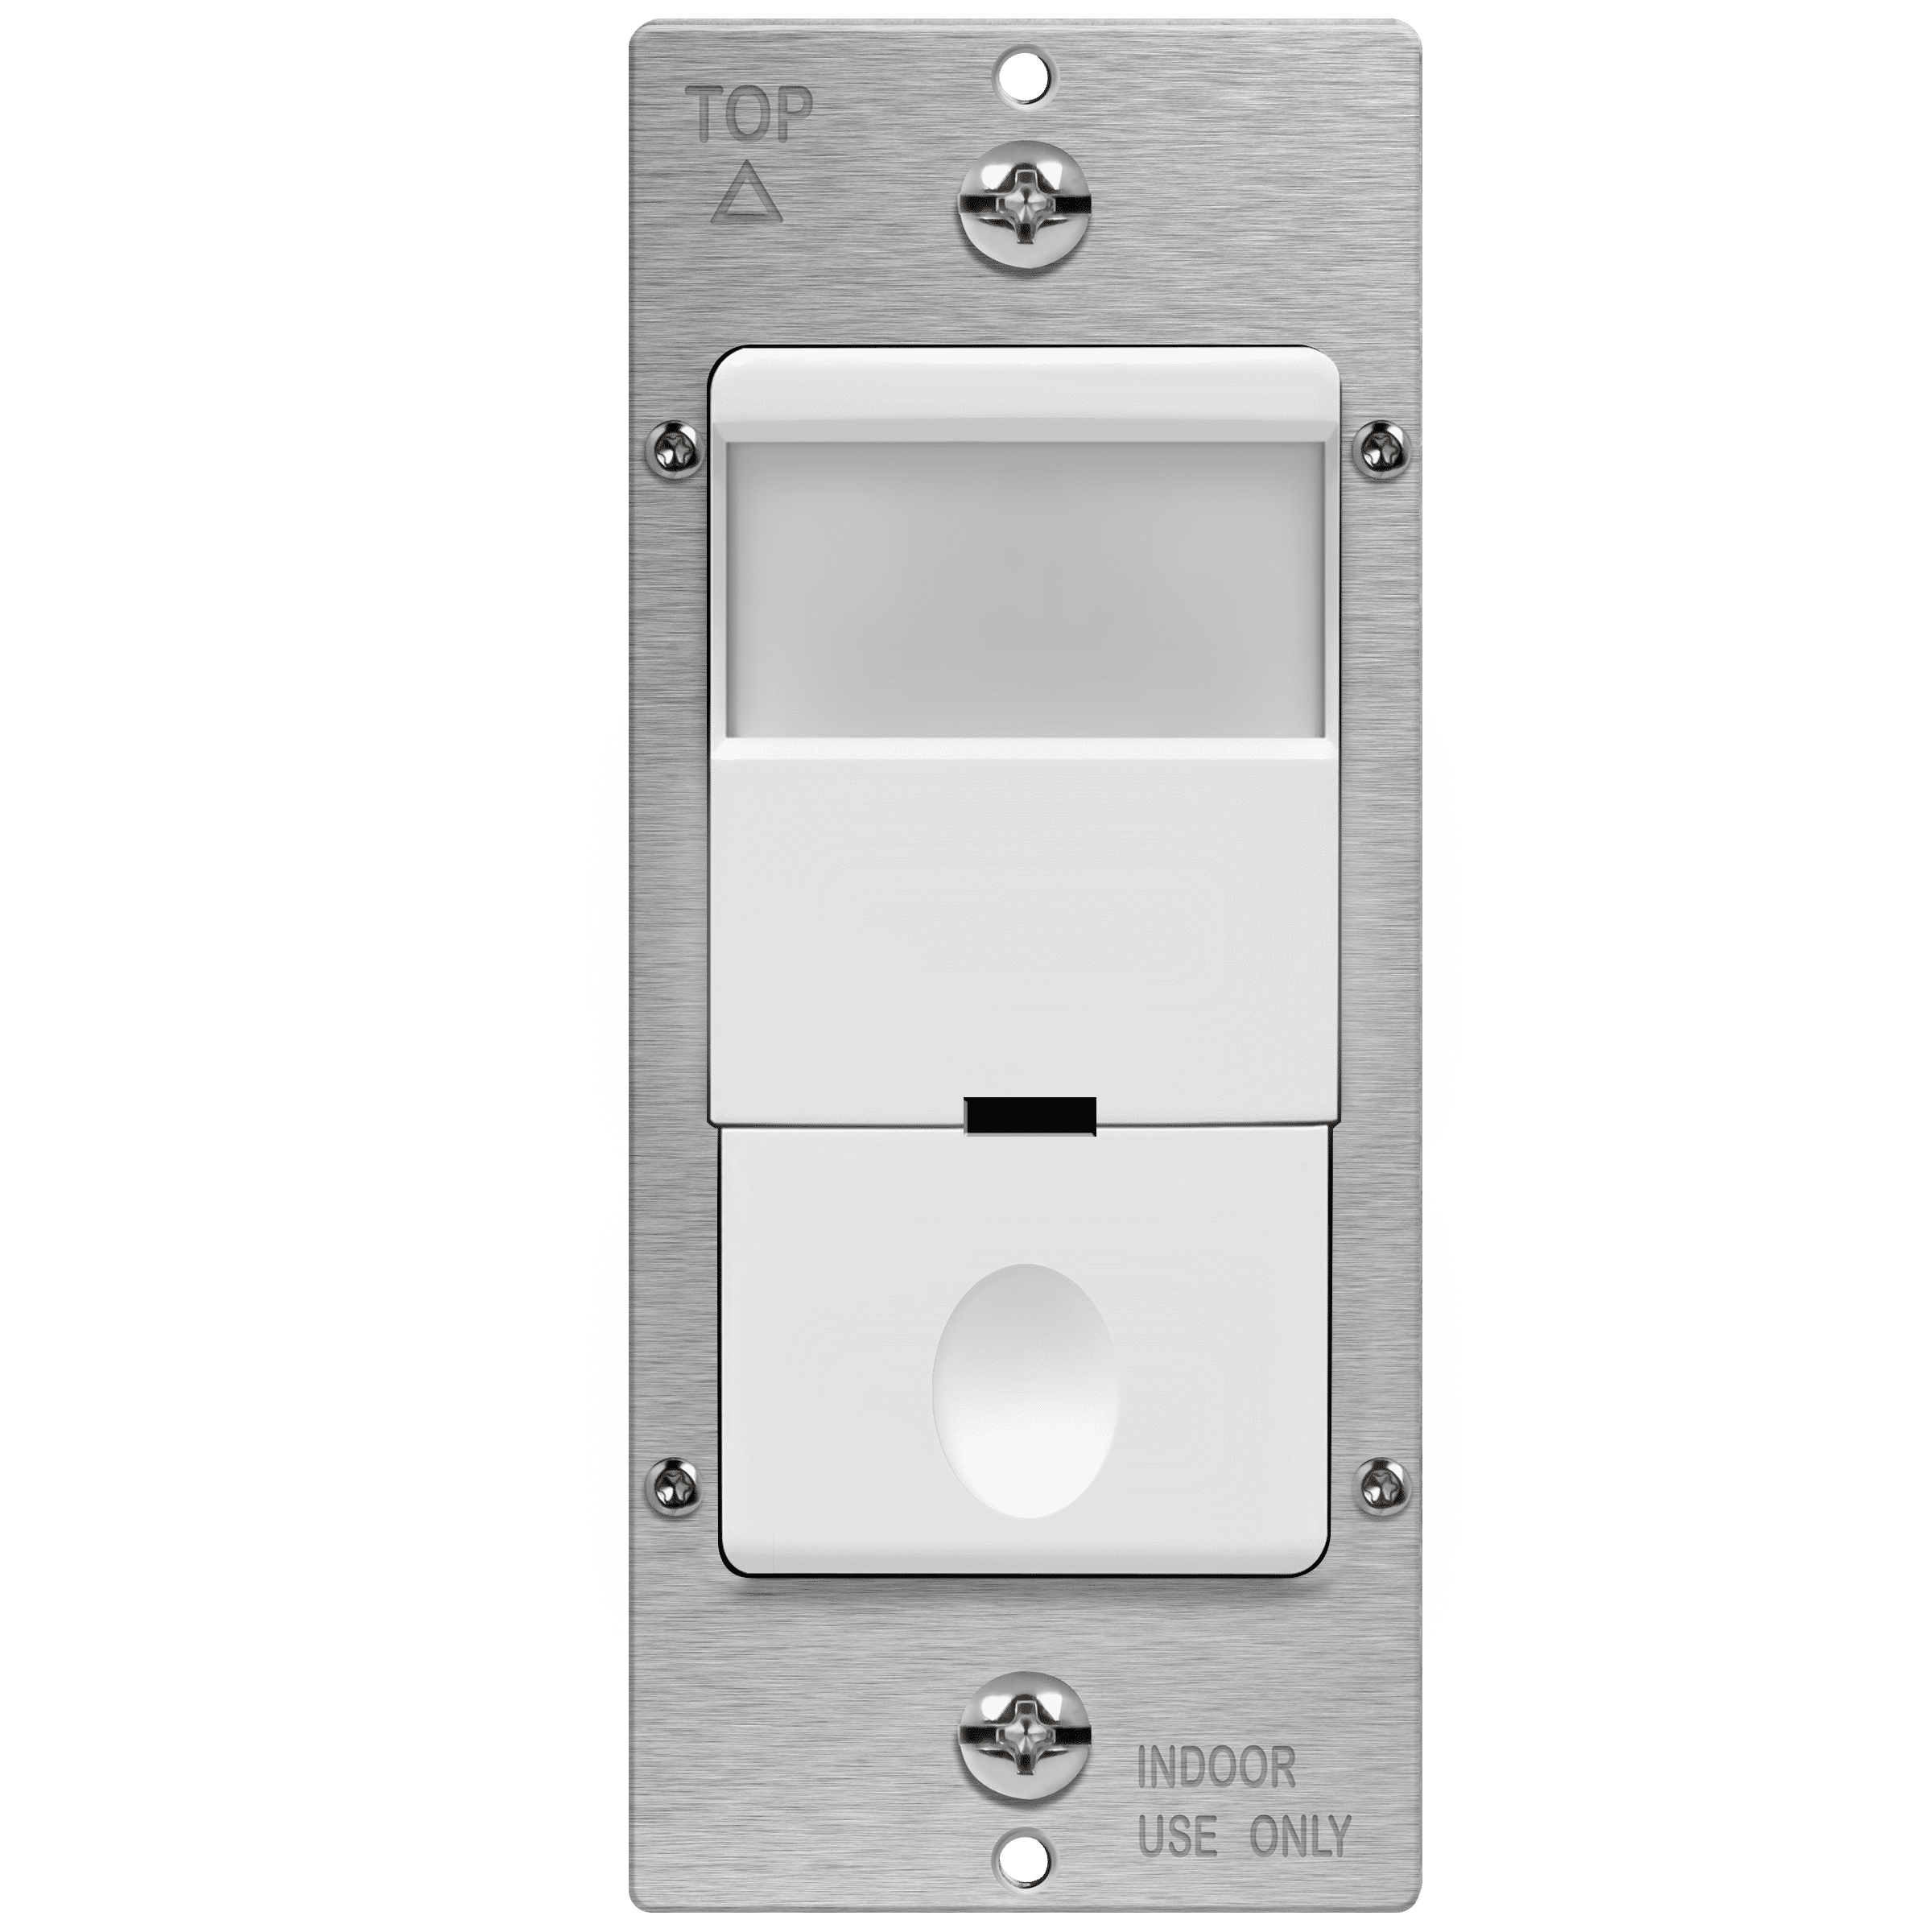 Topgreener Motion Sensor Light Switch Pir Occupancy Vacancy Detector